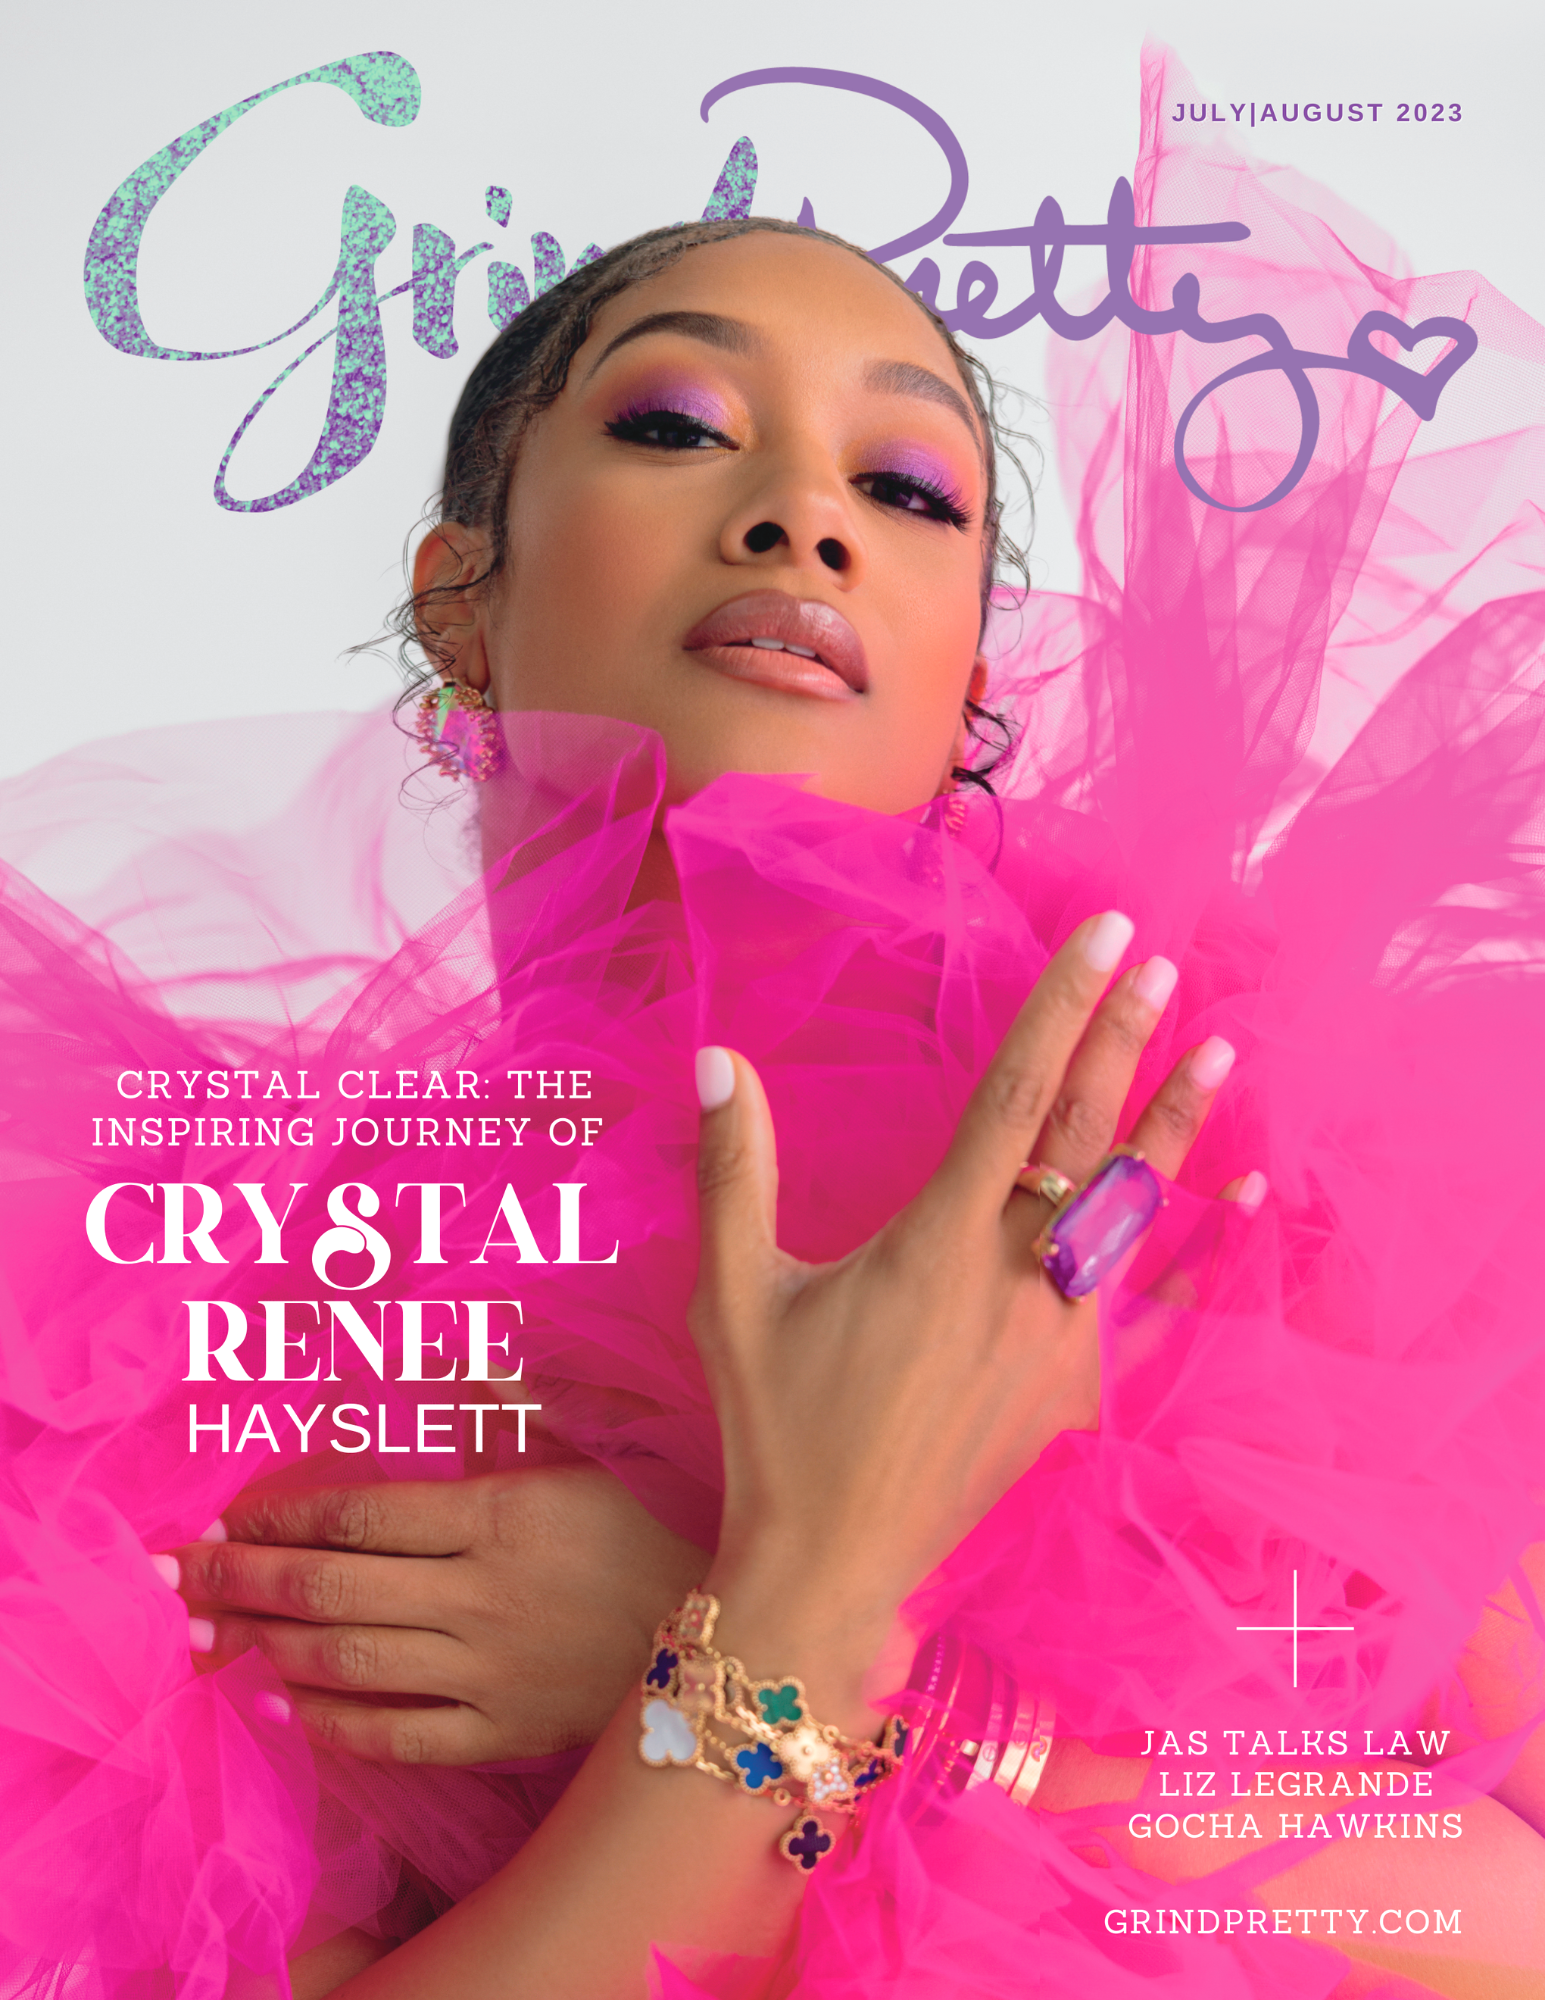 Crystal Clear: The Inspiring Journey of Crystal Renee Hayslett